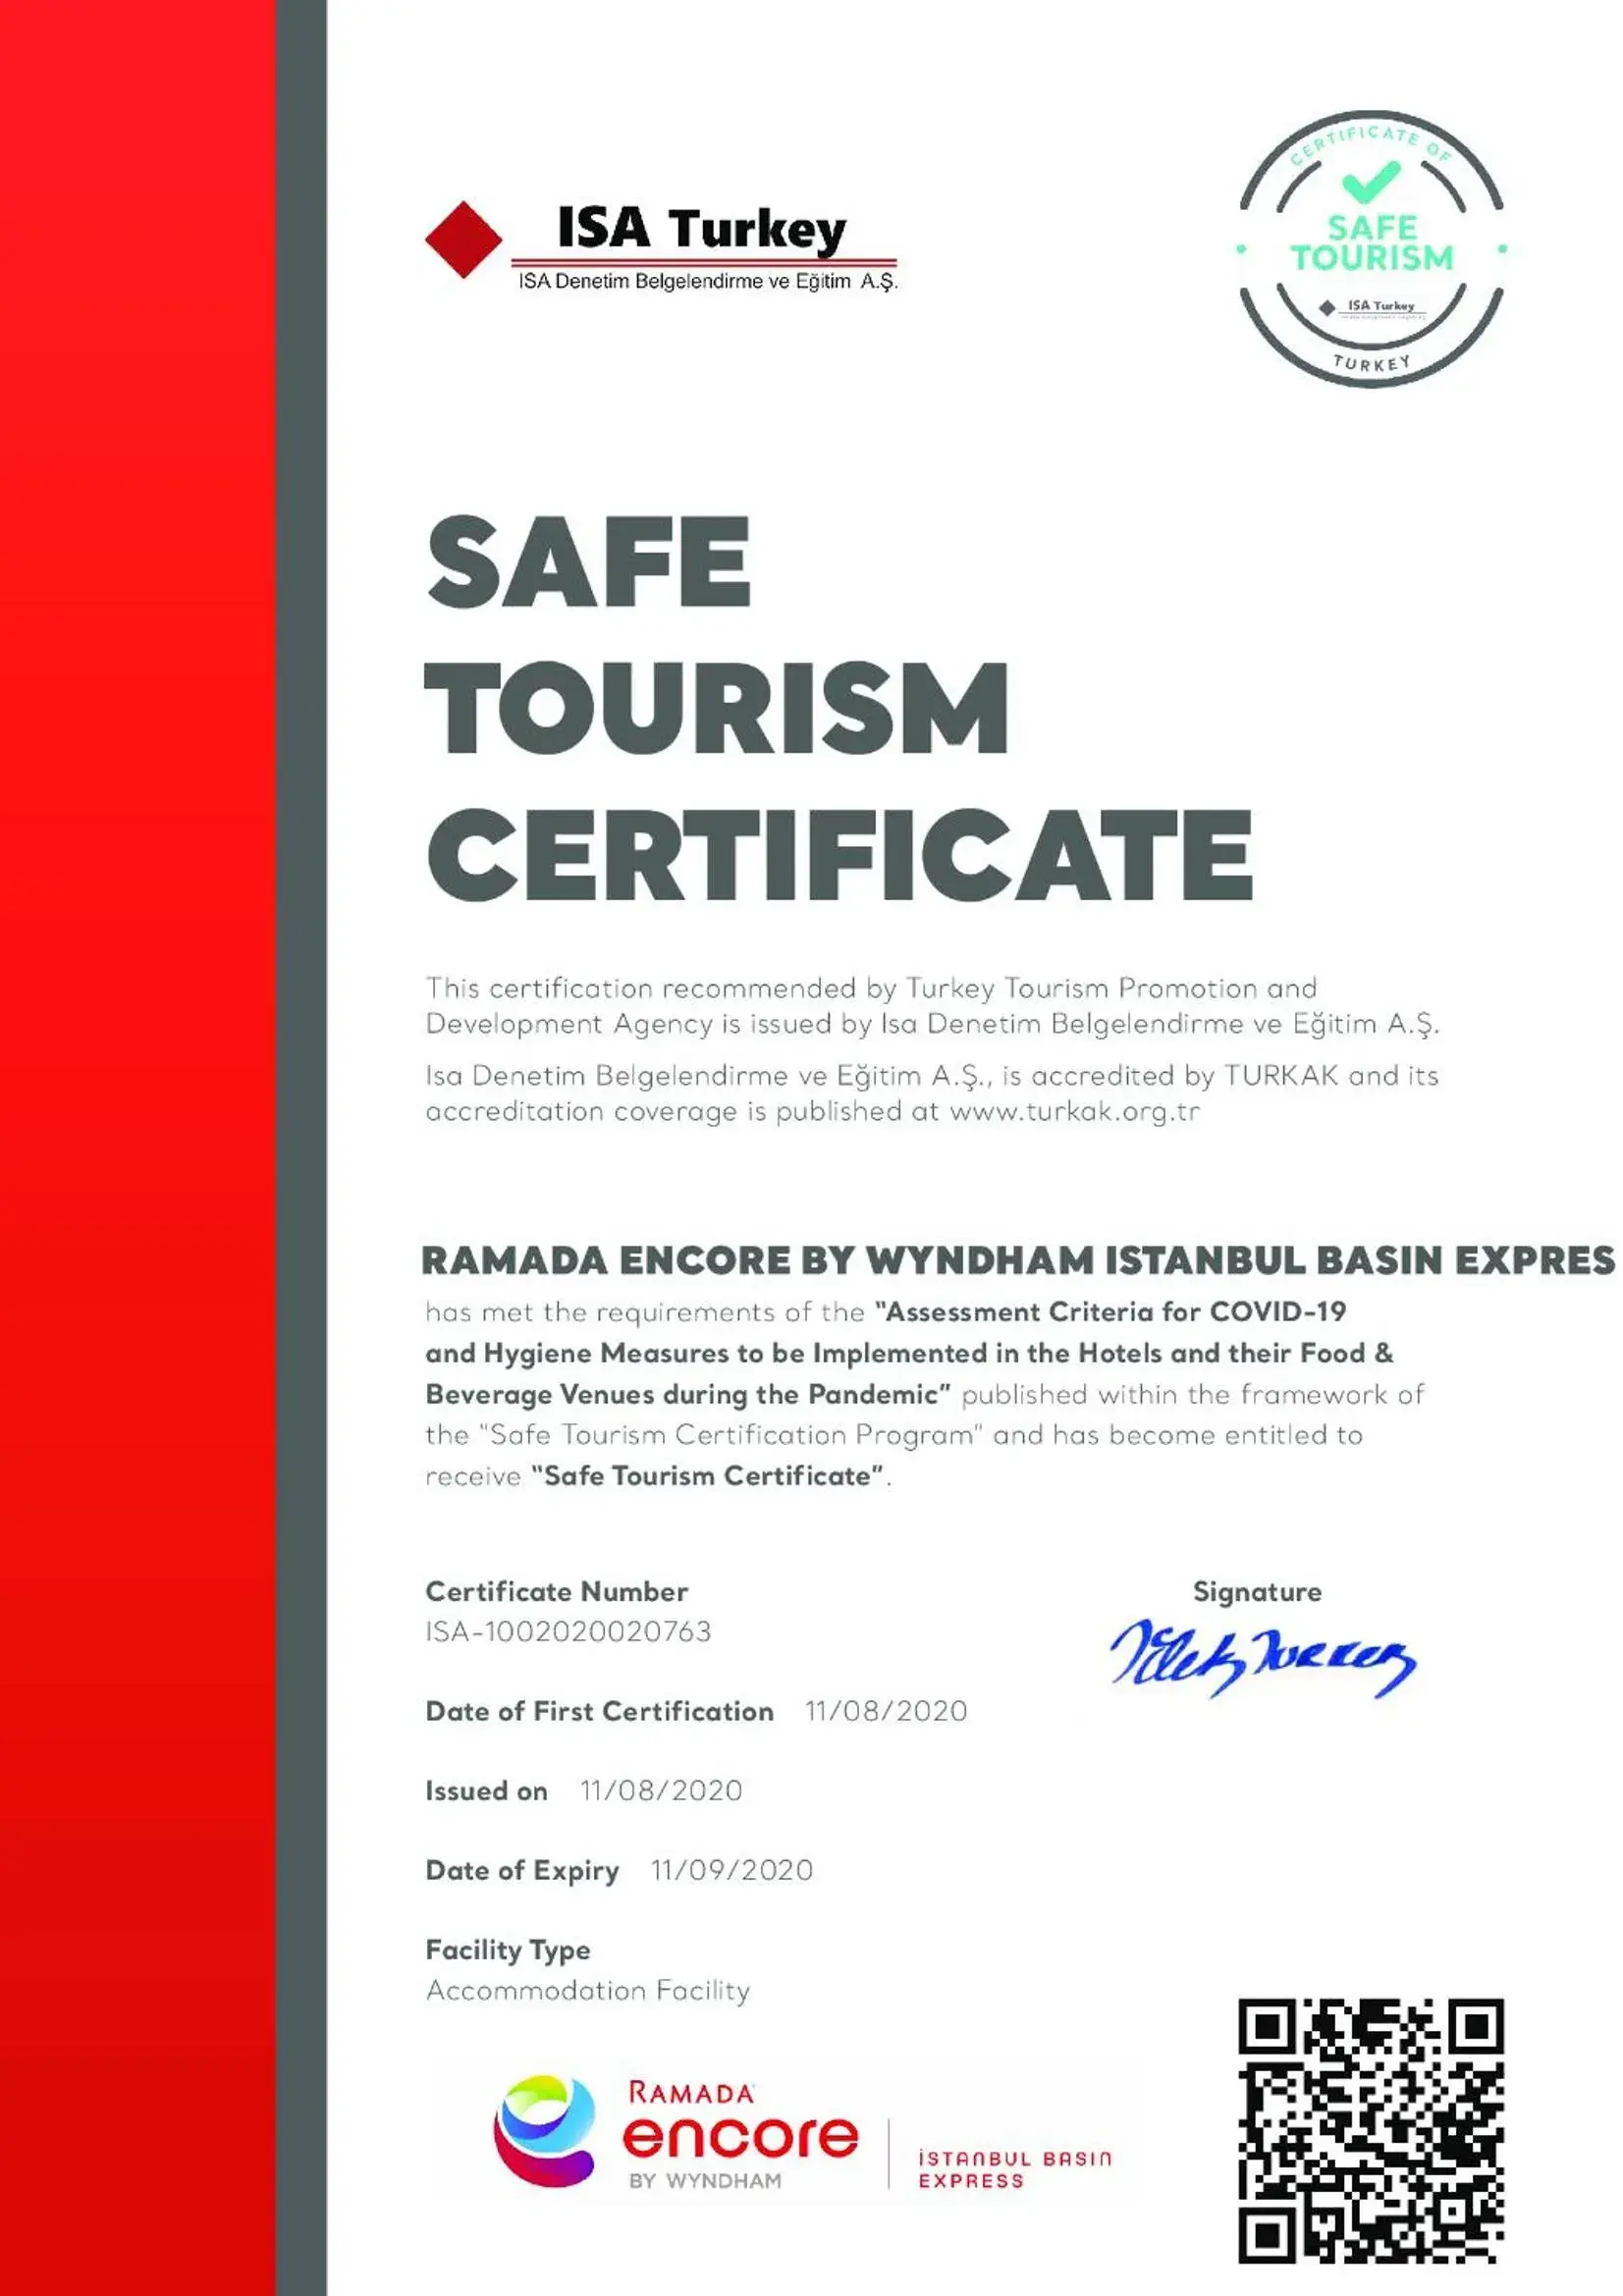 Logo/Certificate/Sign in Ramada Encore By Wyndham Istanbul Basin Express